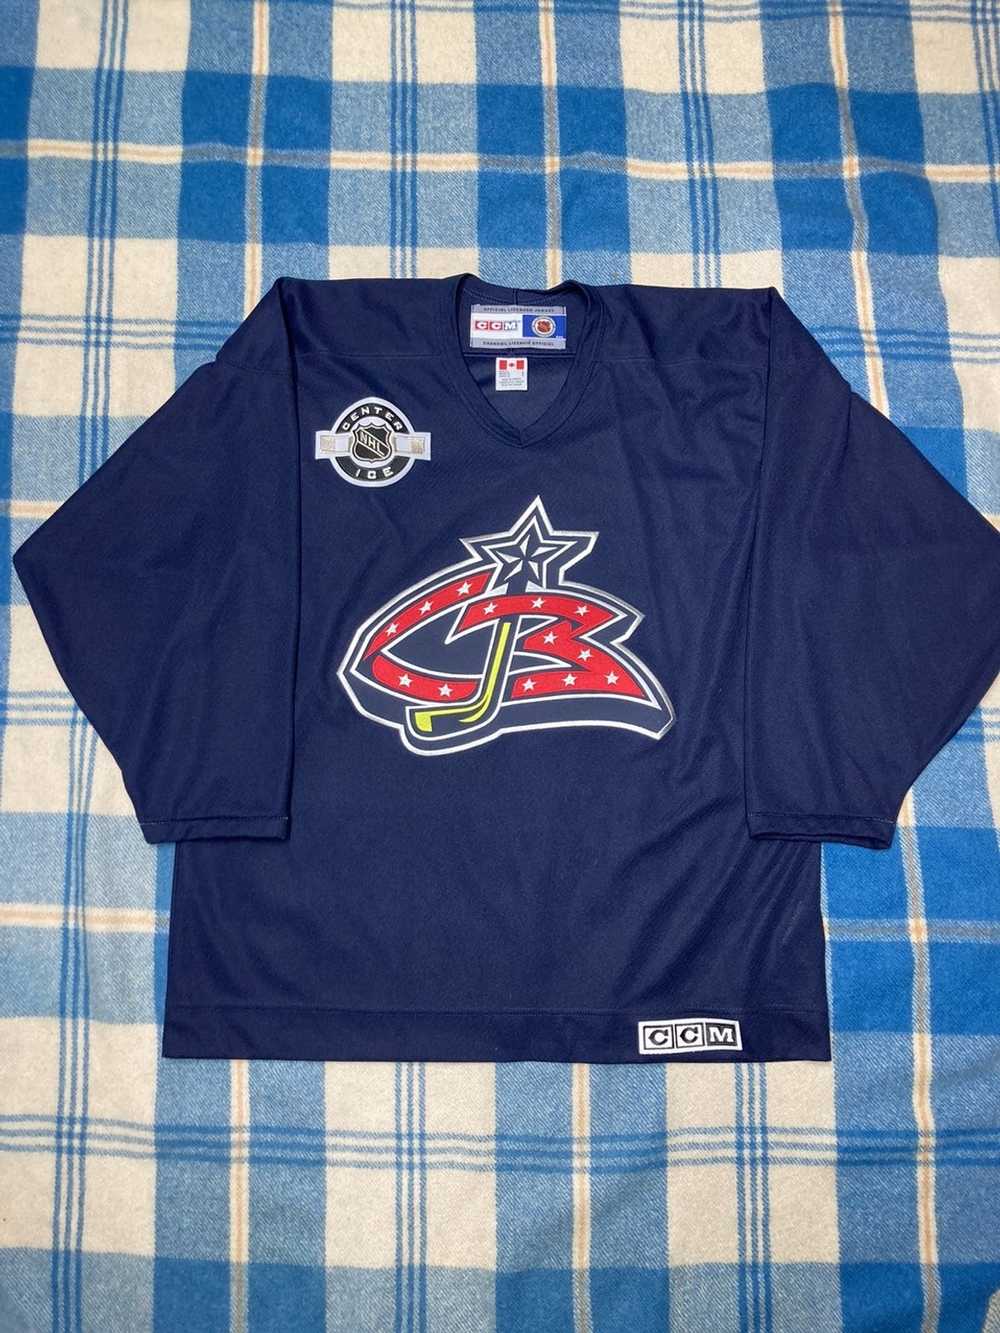 Vintage Starter Anaheim Mighty Ducks NHL Sewn Patch Hockey Jersey